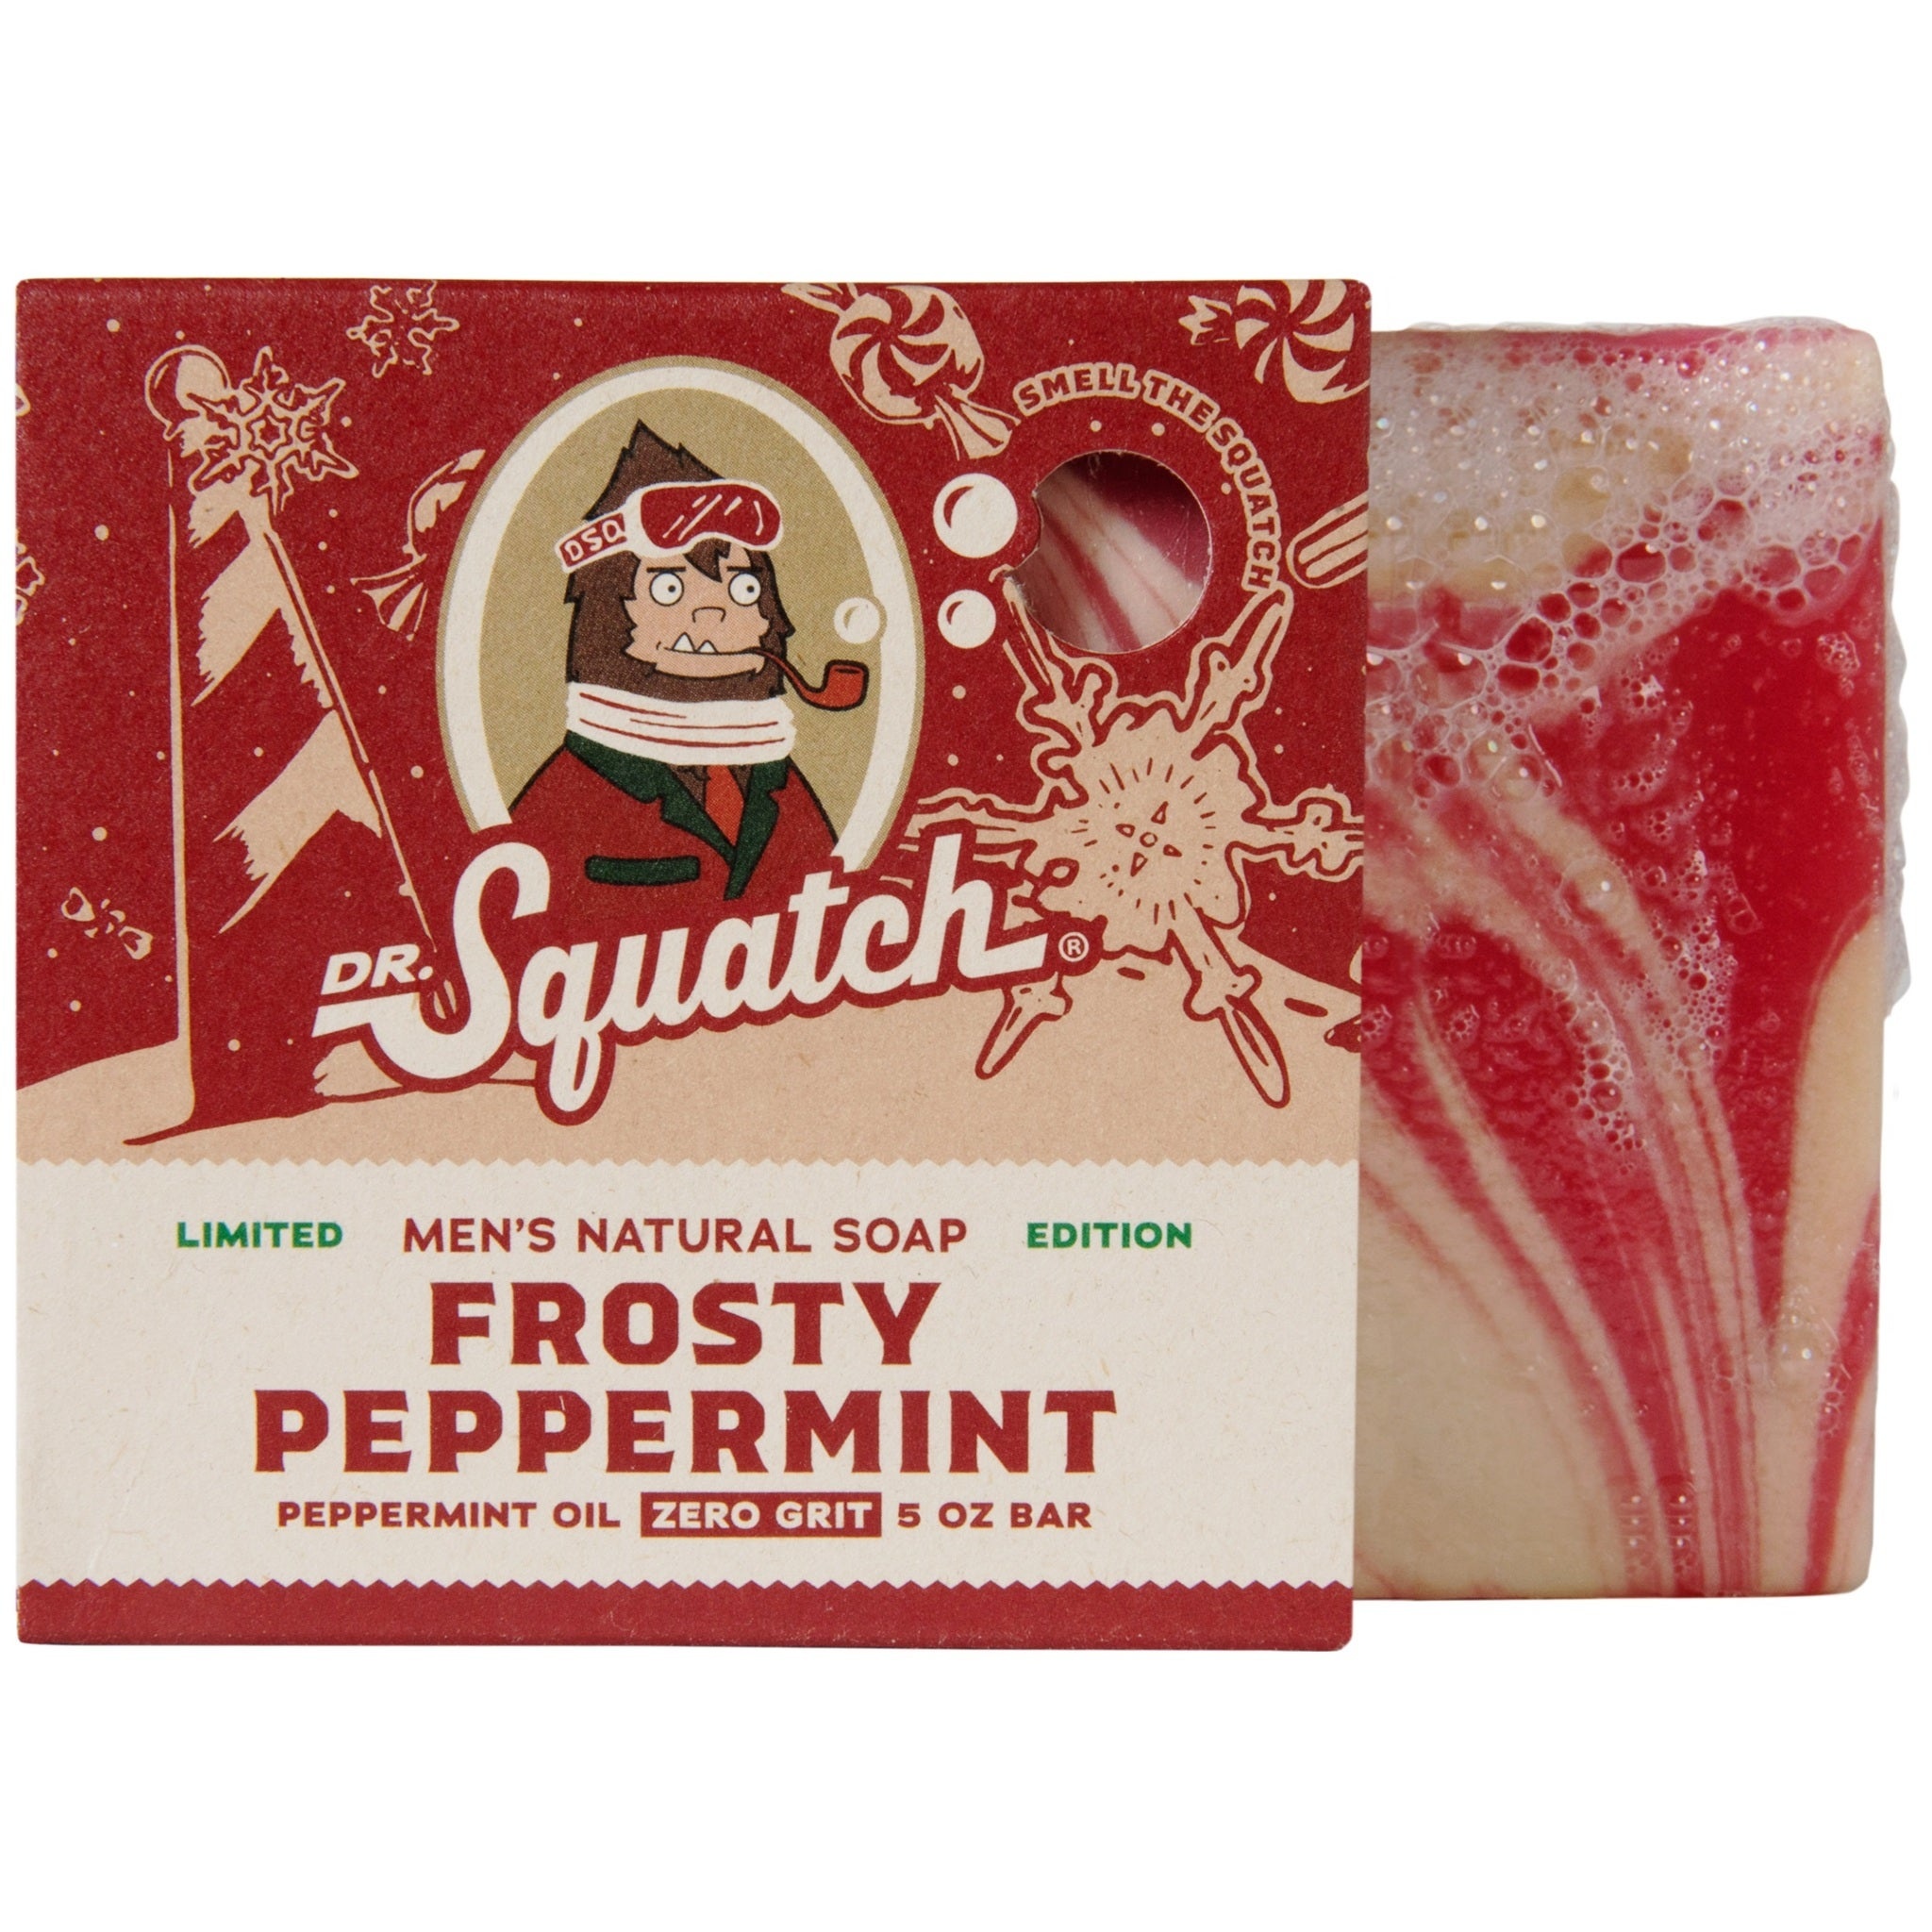 dr squatch frosty peppermint bar｜TikTok Search